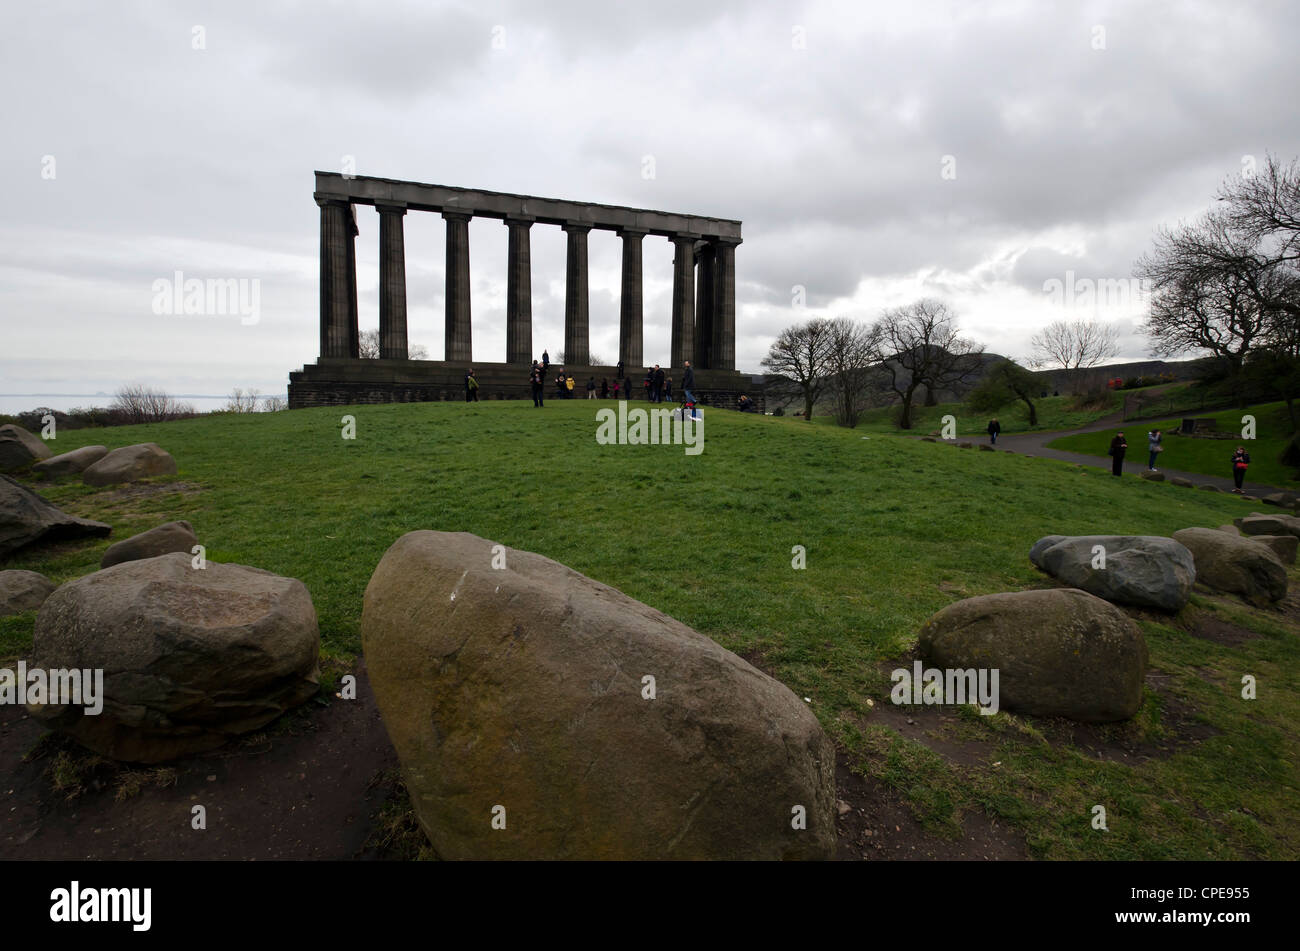 The Edinburgh Monument 'Edinburgh's Disgrace' on Calton Hill in the centre of Edinburgh, Scotland. Stock Photo